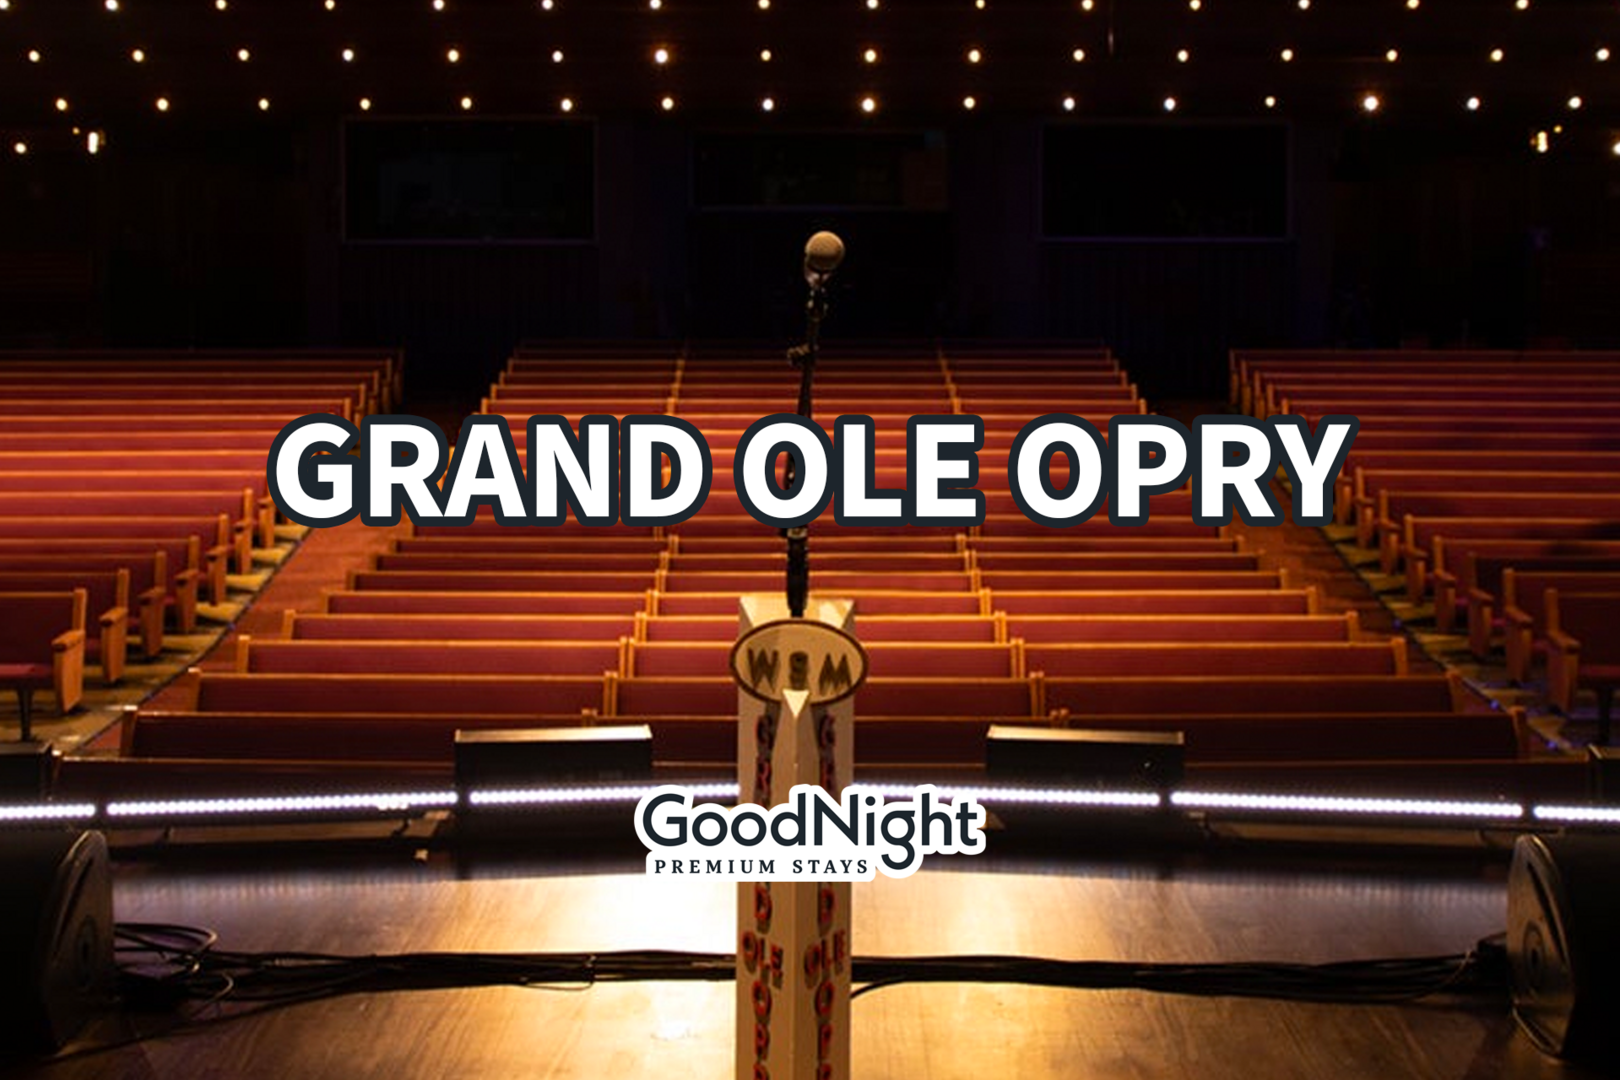 14 mins: Grand Ole Opry